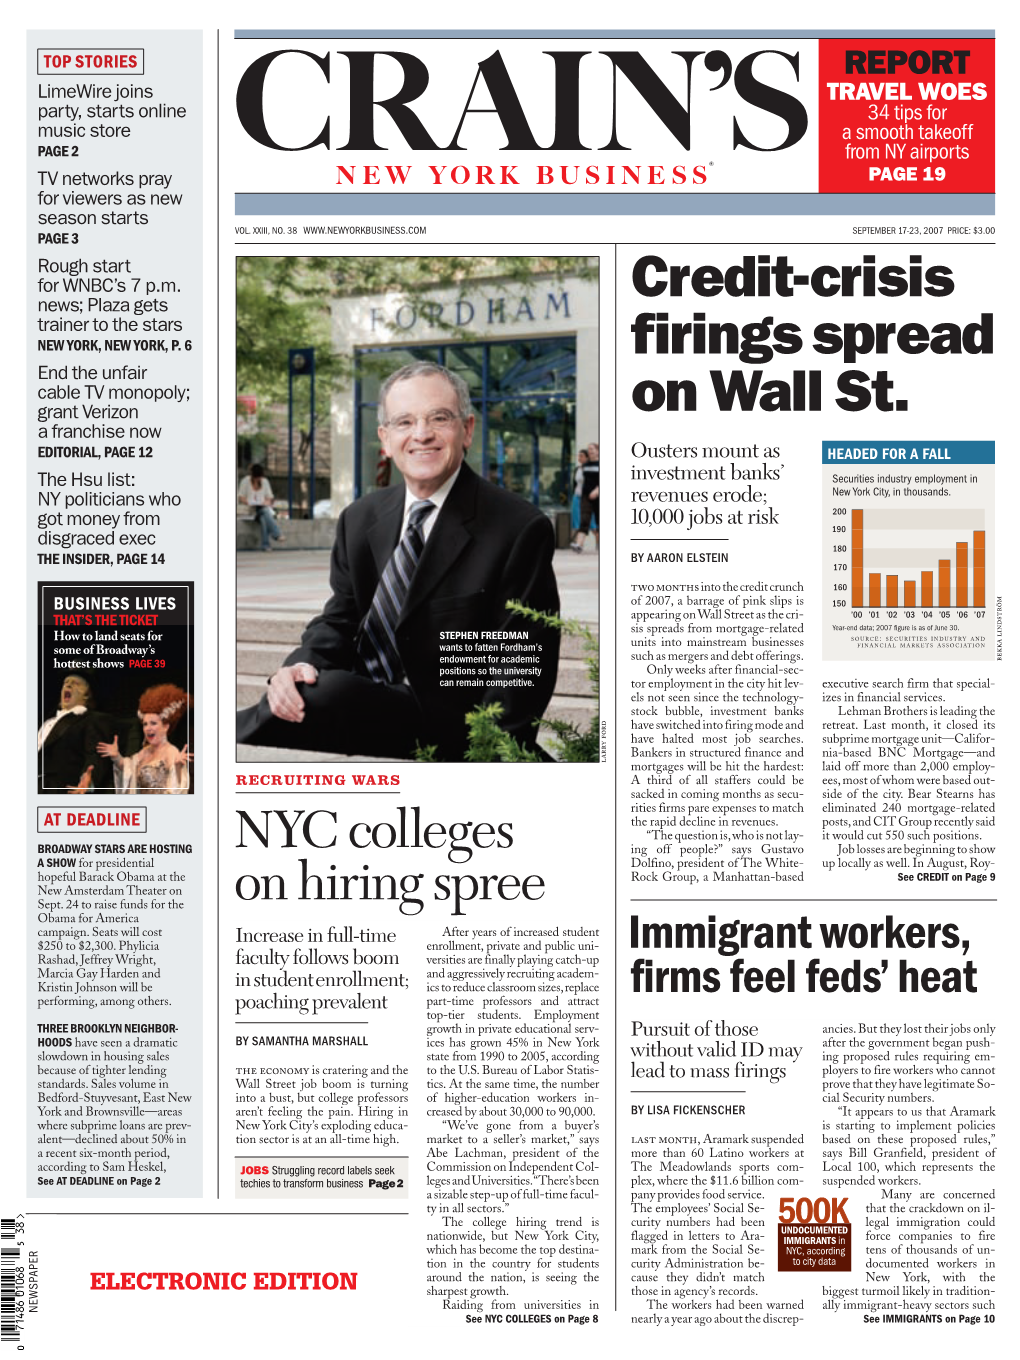 Credit-Crisis Firings Spread on Wall